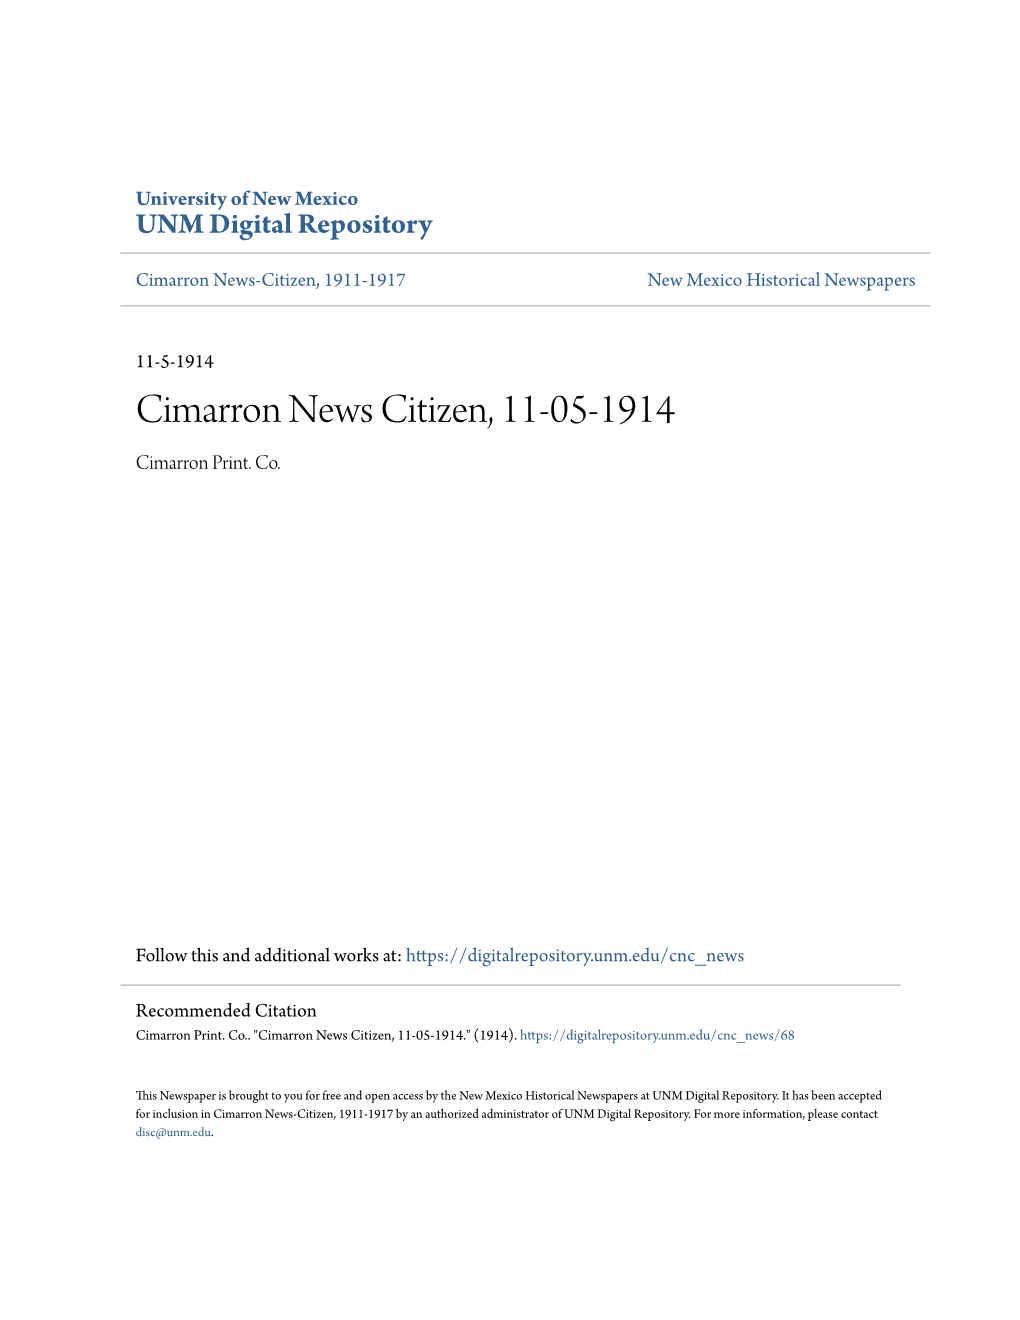 Cimarron News Citizen, 11-05-1914 Cimarron Print